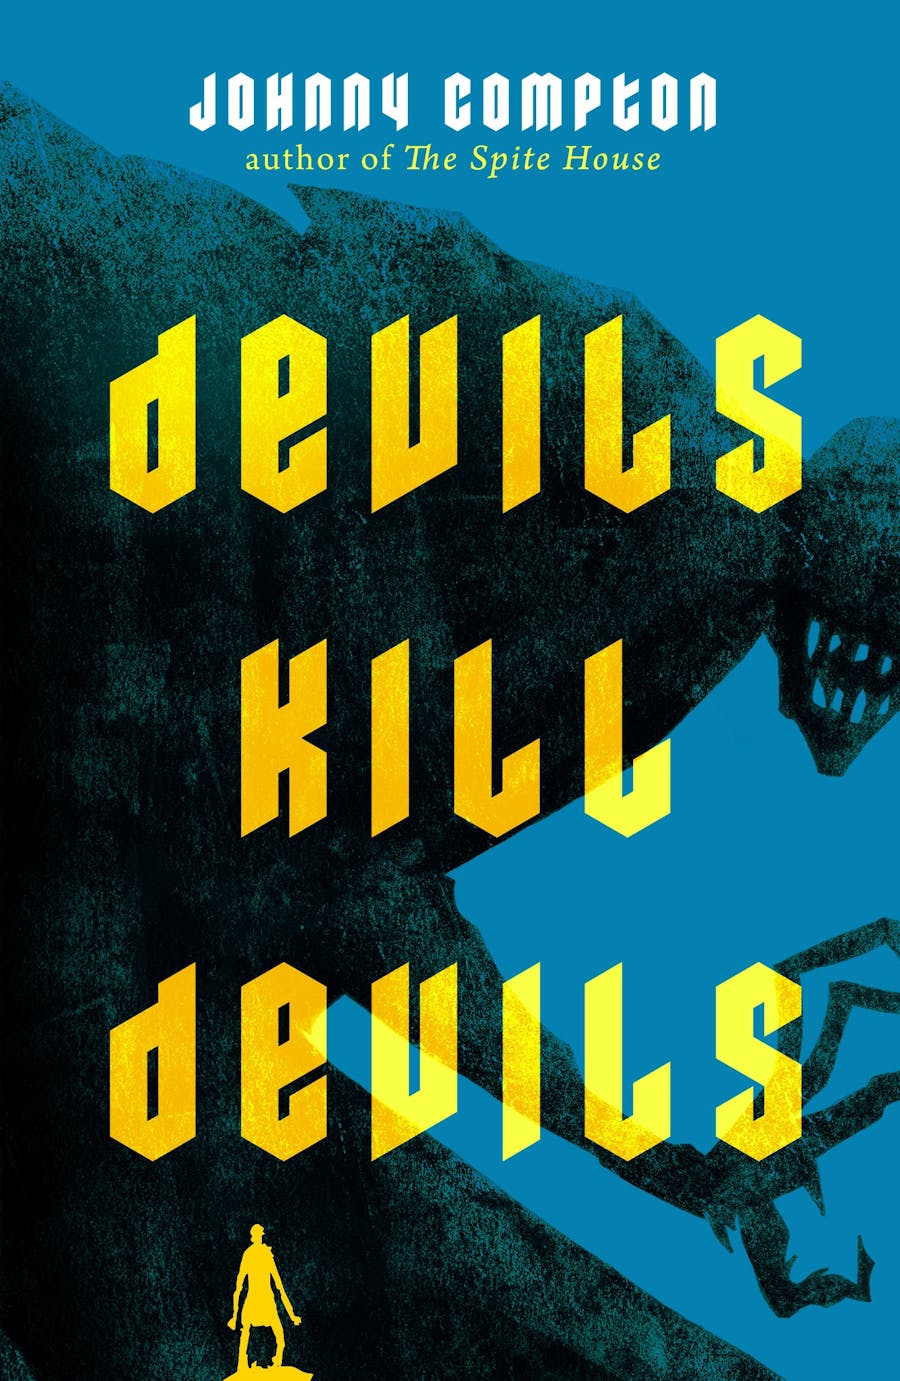 New Horror Book Review: Johnny Compton’s Devils Kill Devils (2024, Tor Nightfire)